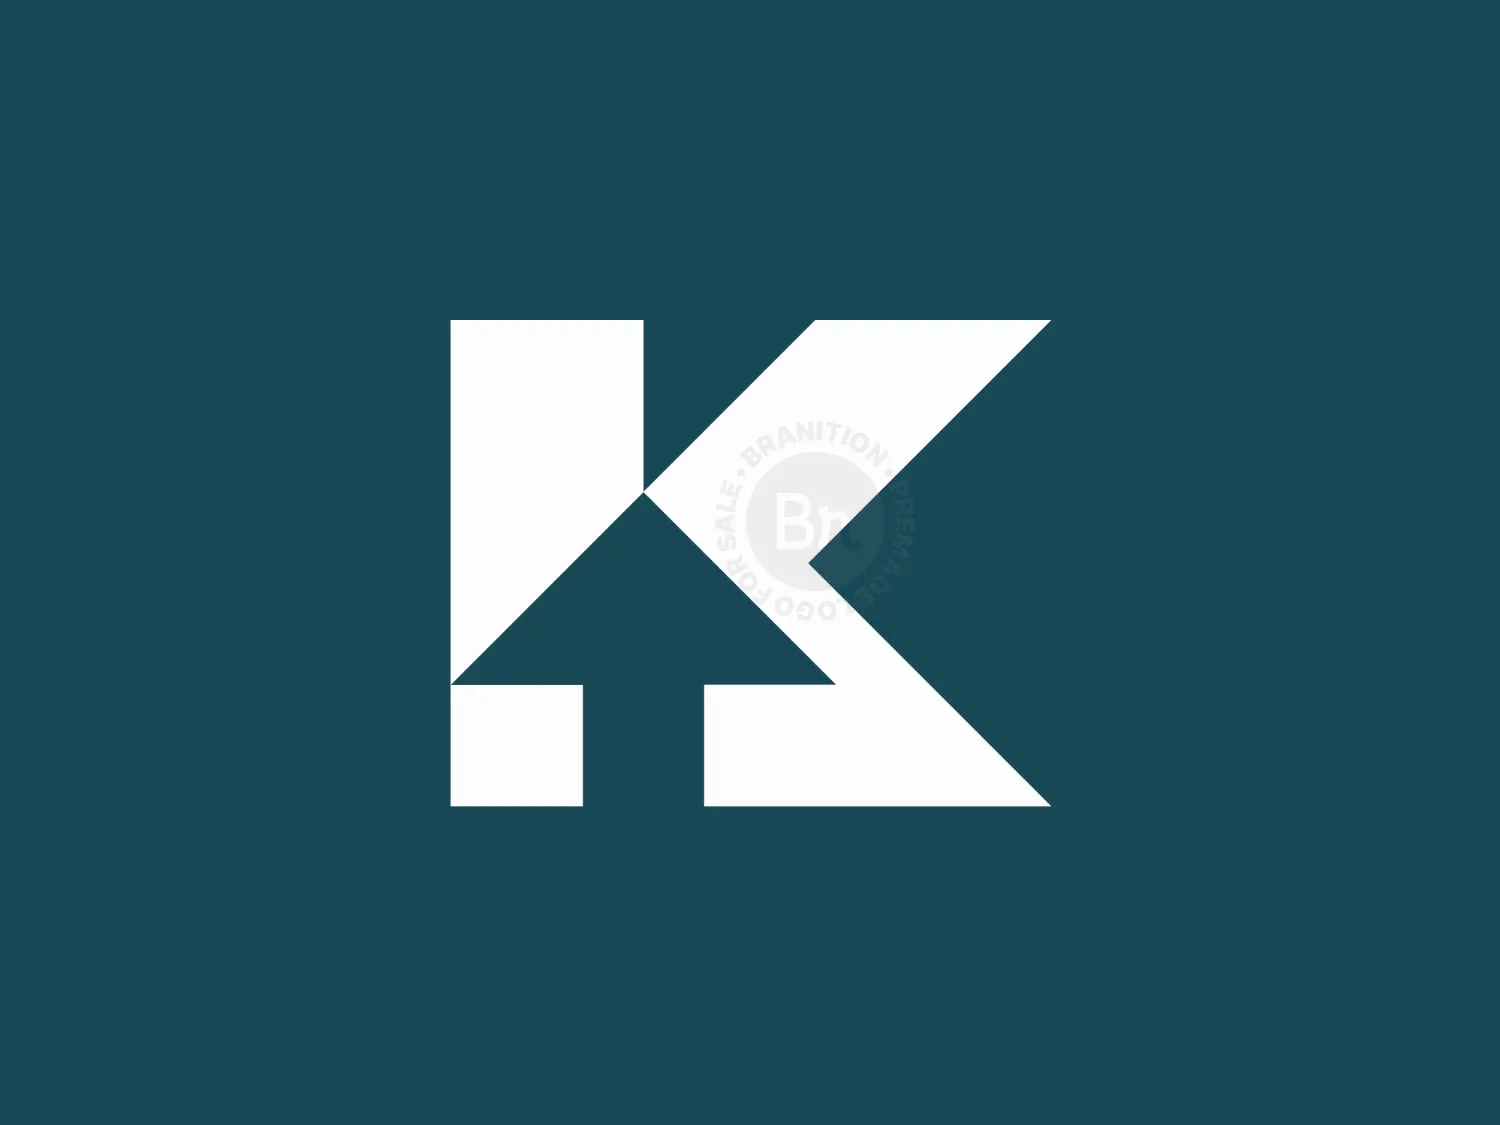 Letter K Arrow Logo